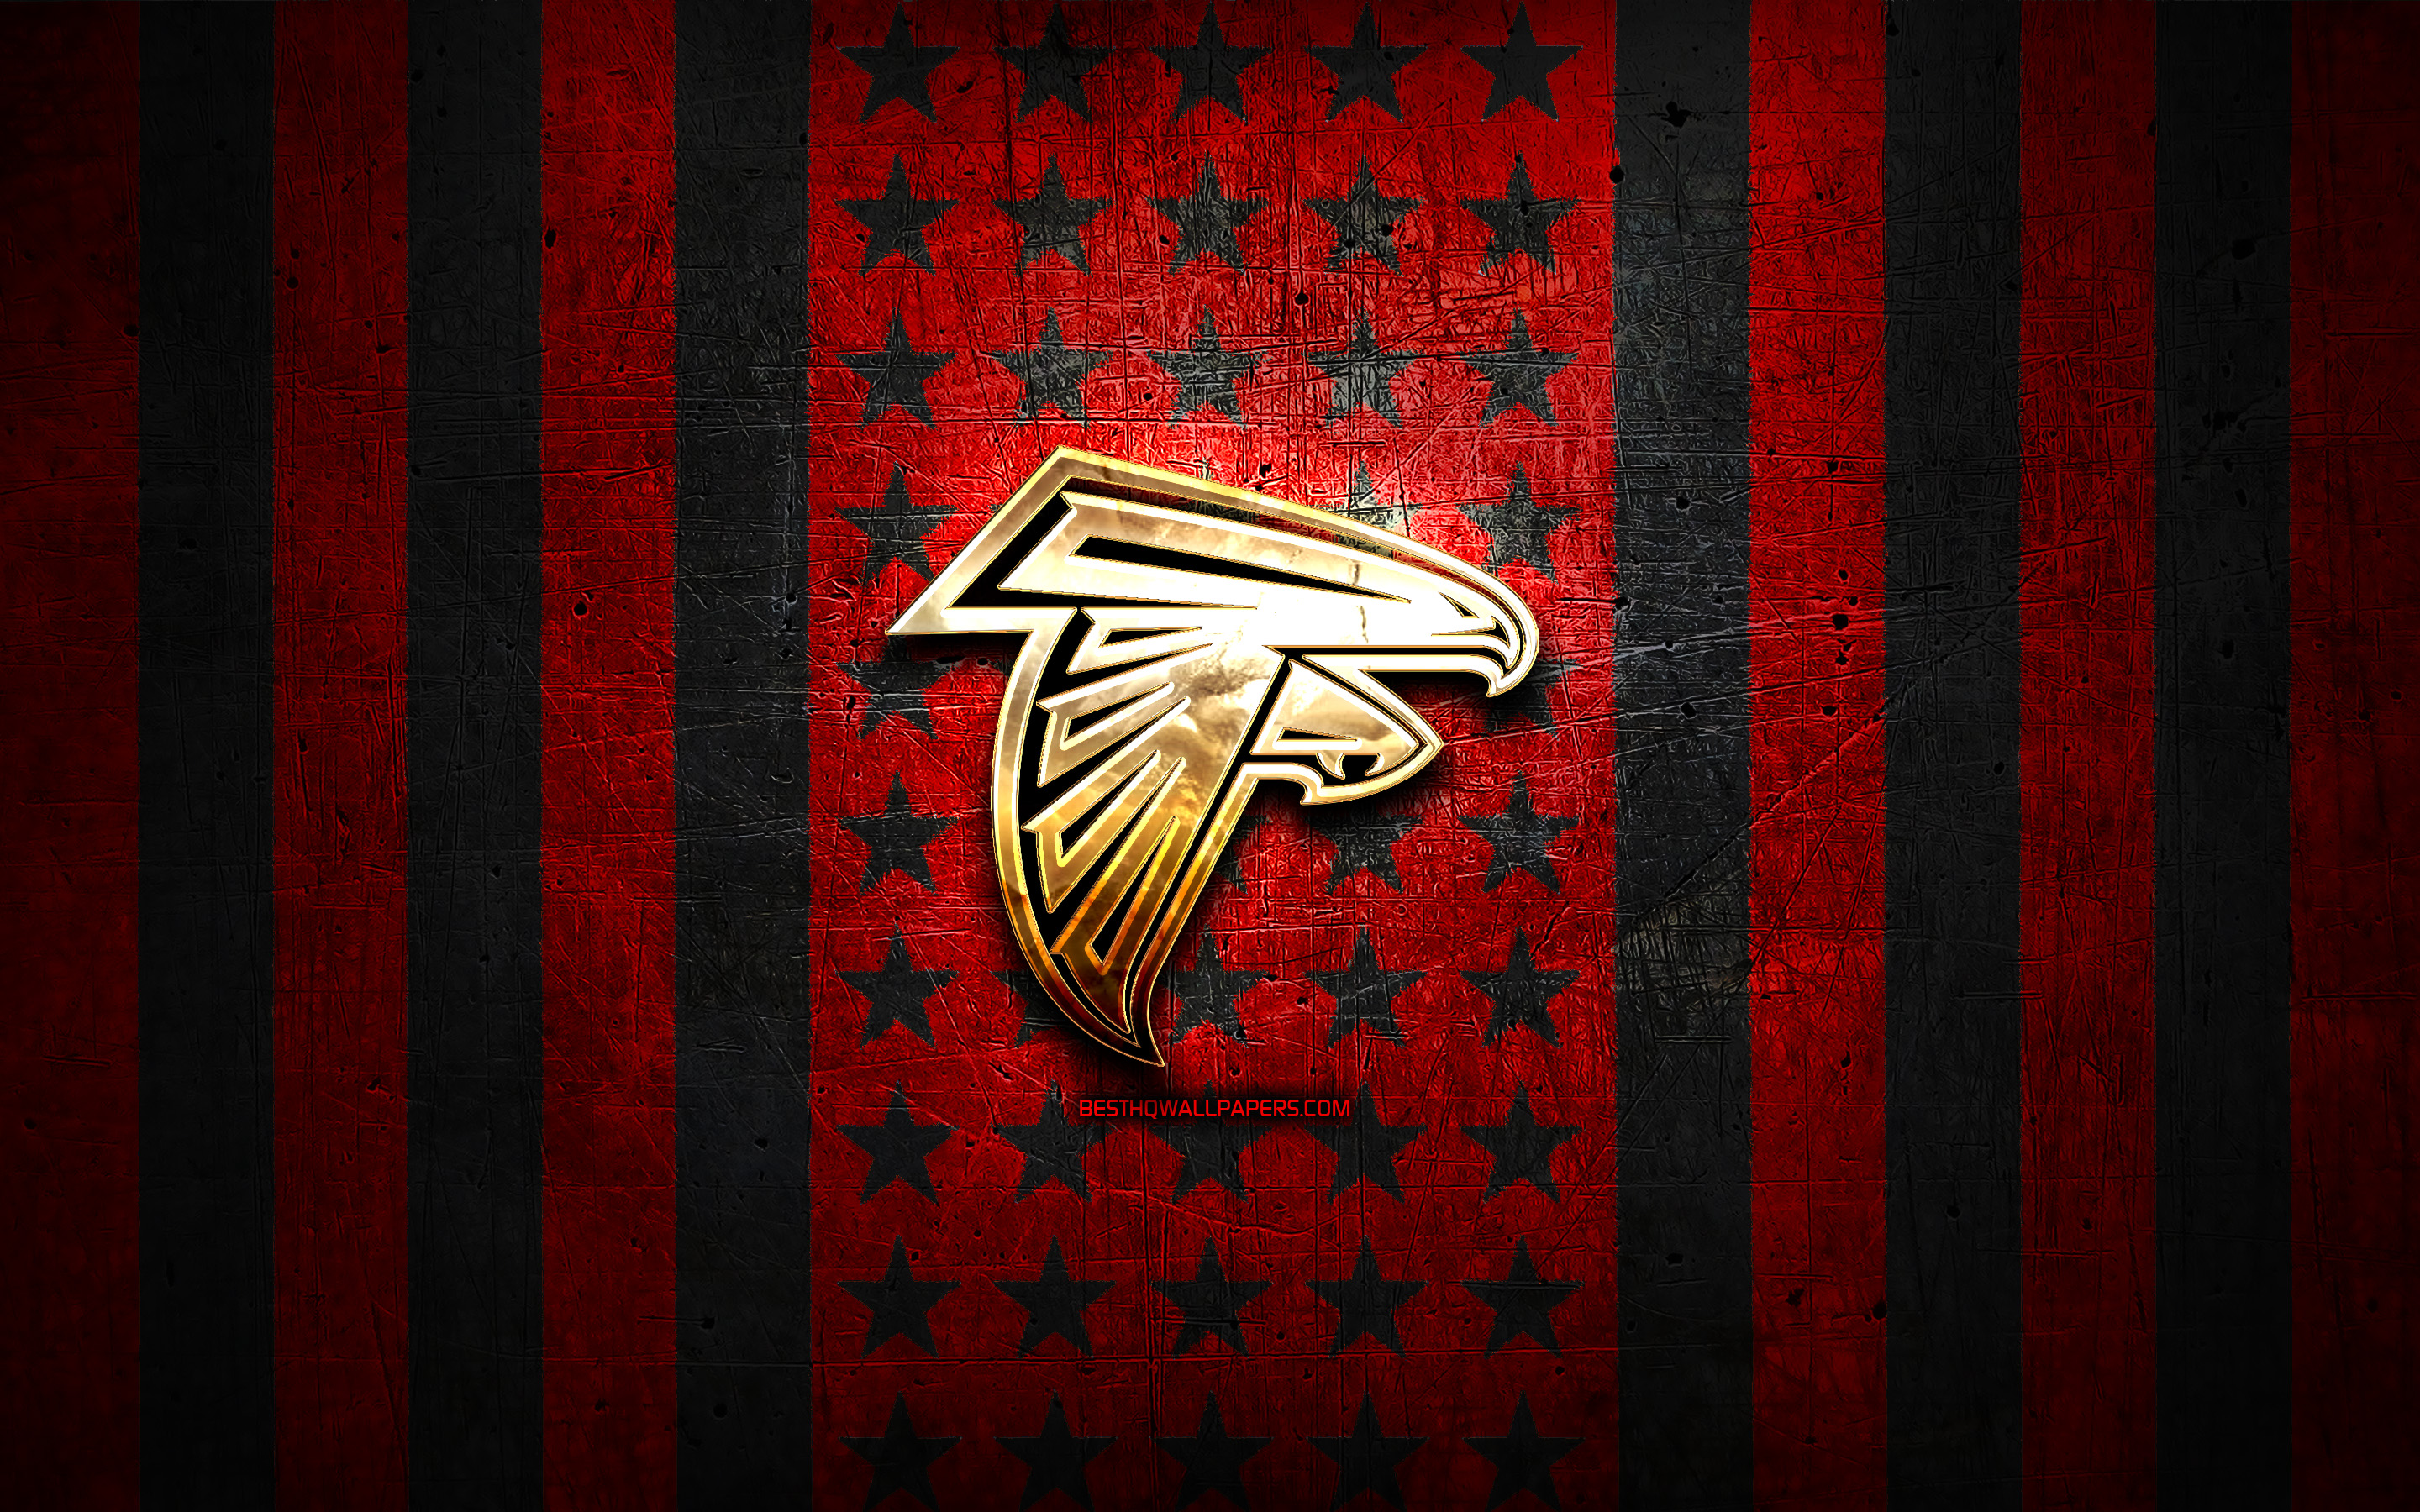 Download wallpaper 1920x1080 atlanta falcons american football logo full  hd hdtv fhd 1080p hd background